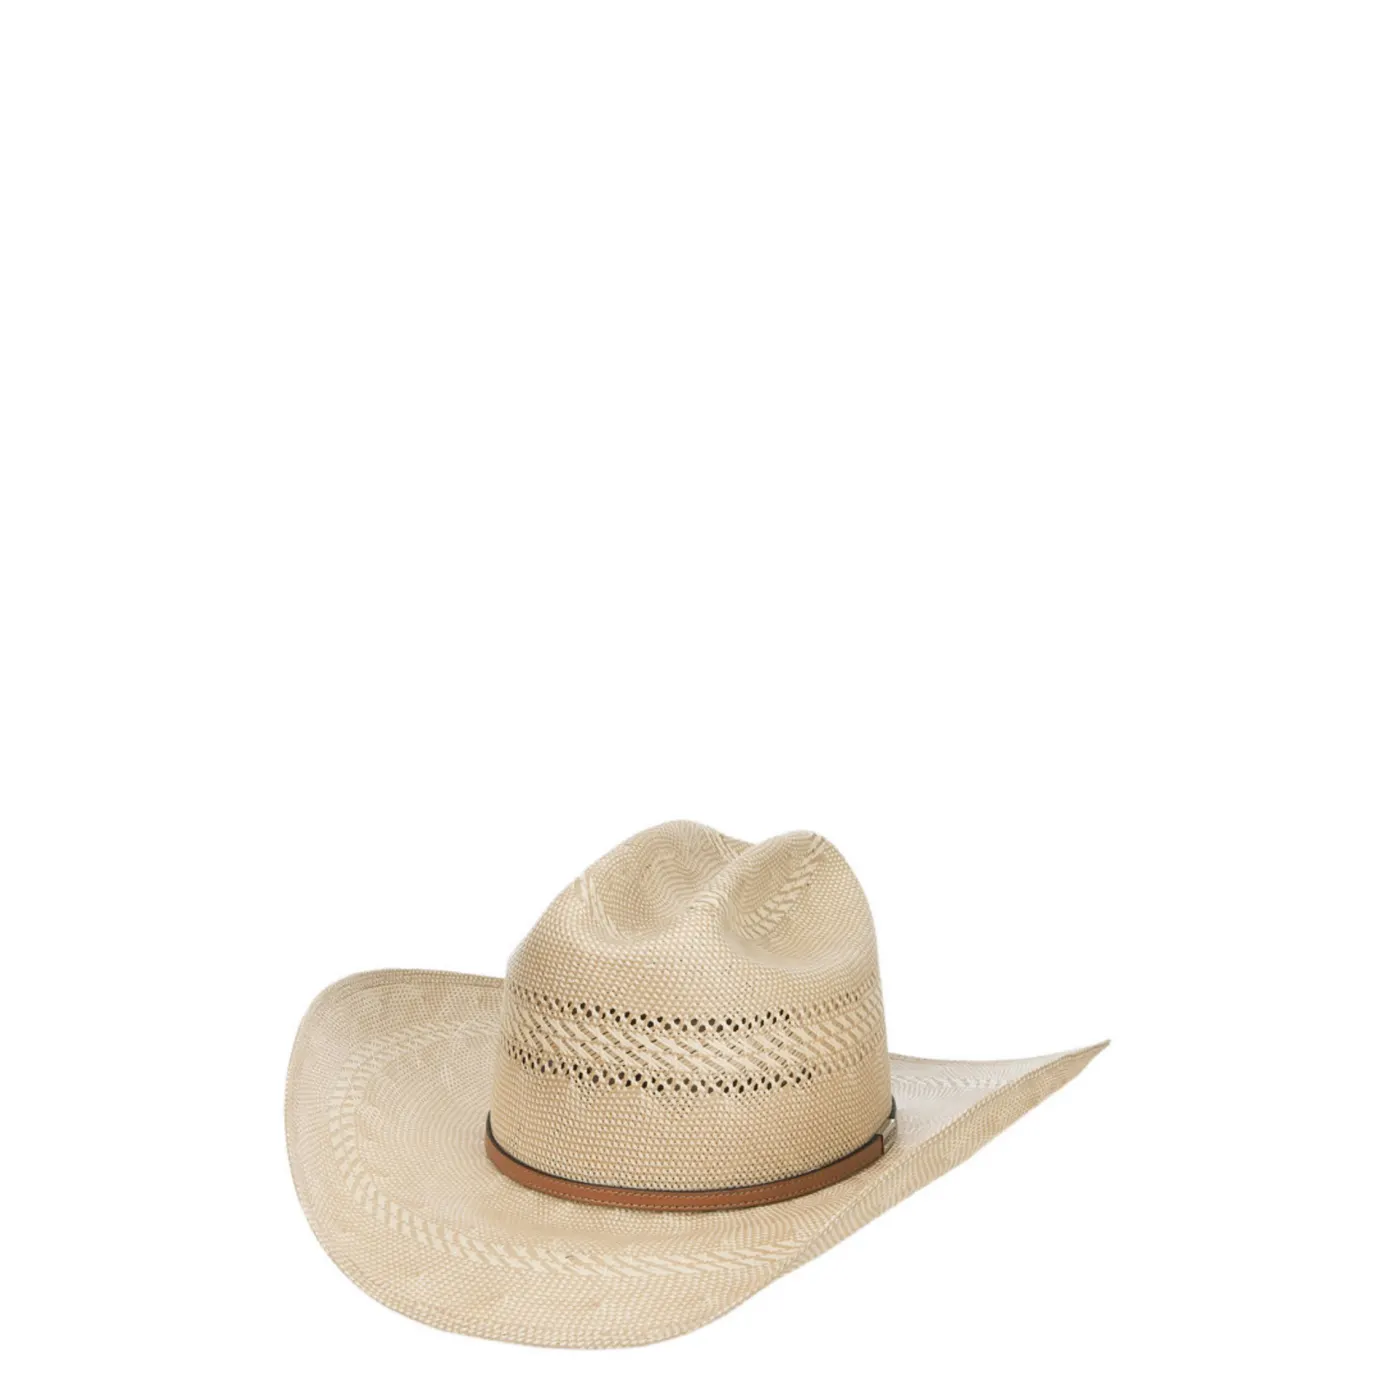 Resistol Open Range 50x Straw Cowboy Hat 6 3/4 / Natural/Tan